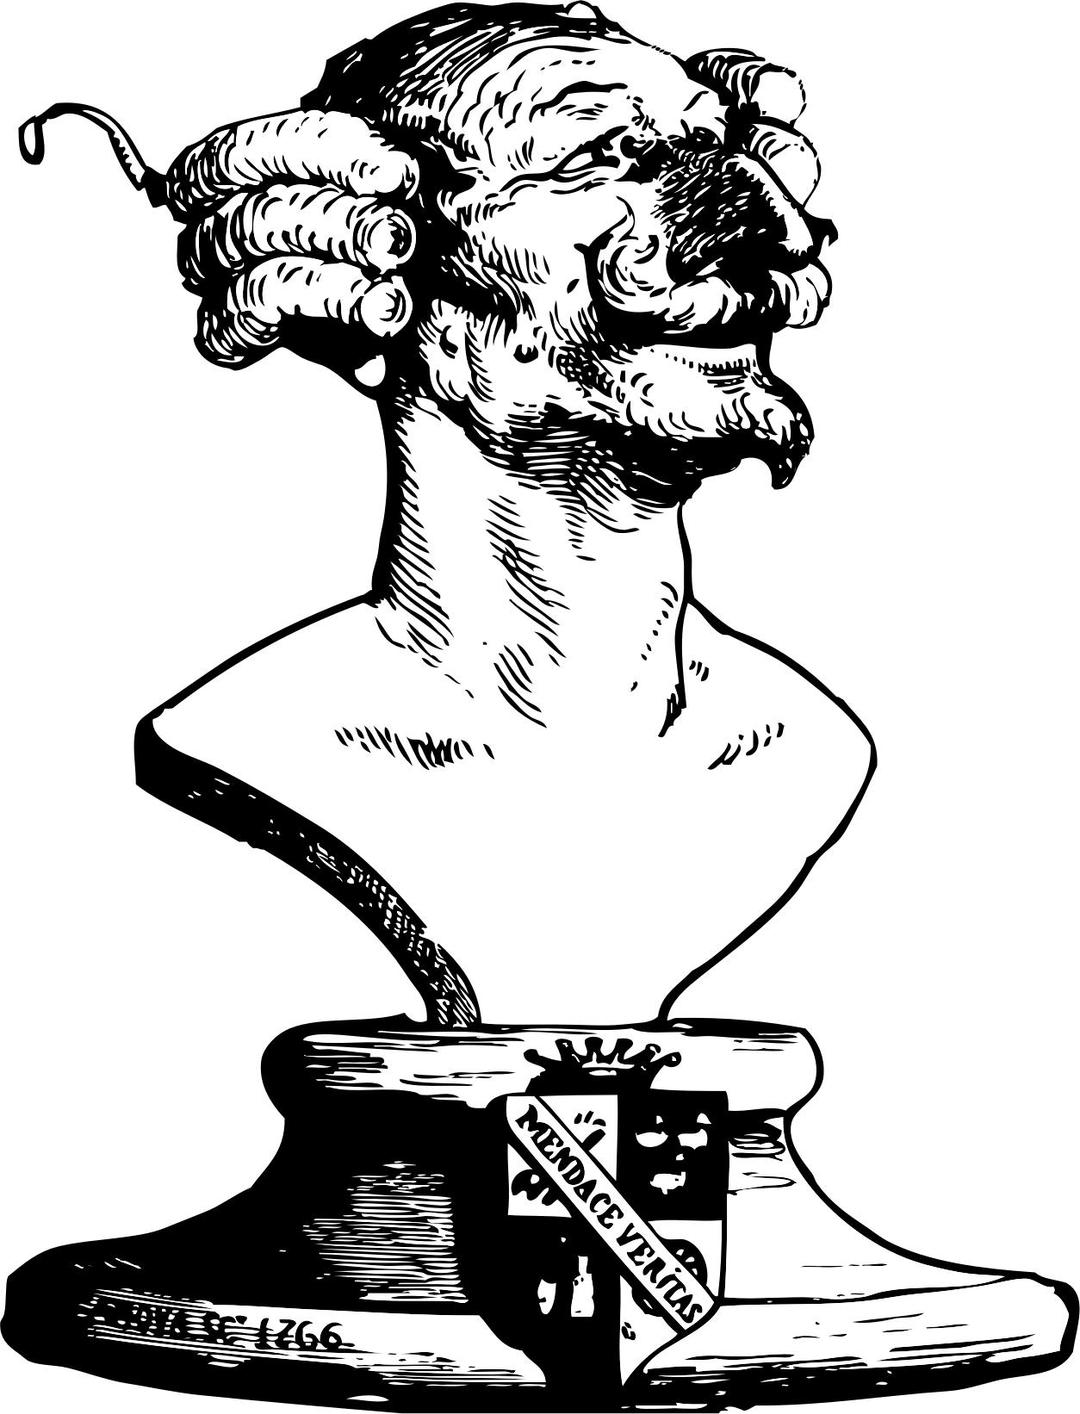 The bust of Baron von Munchausen png transparent